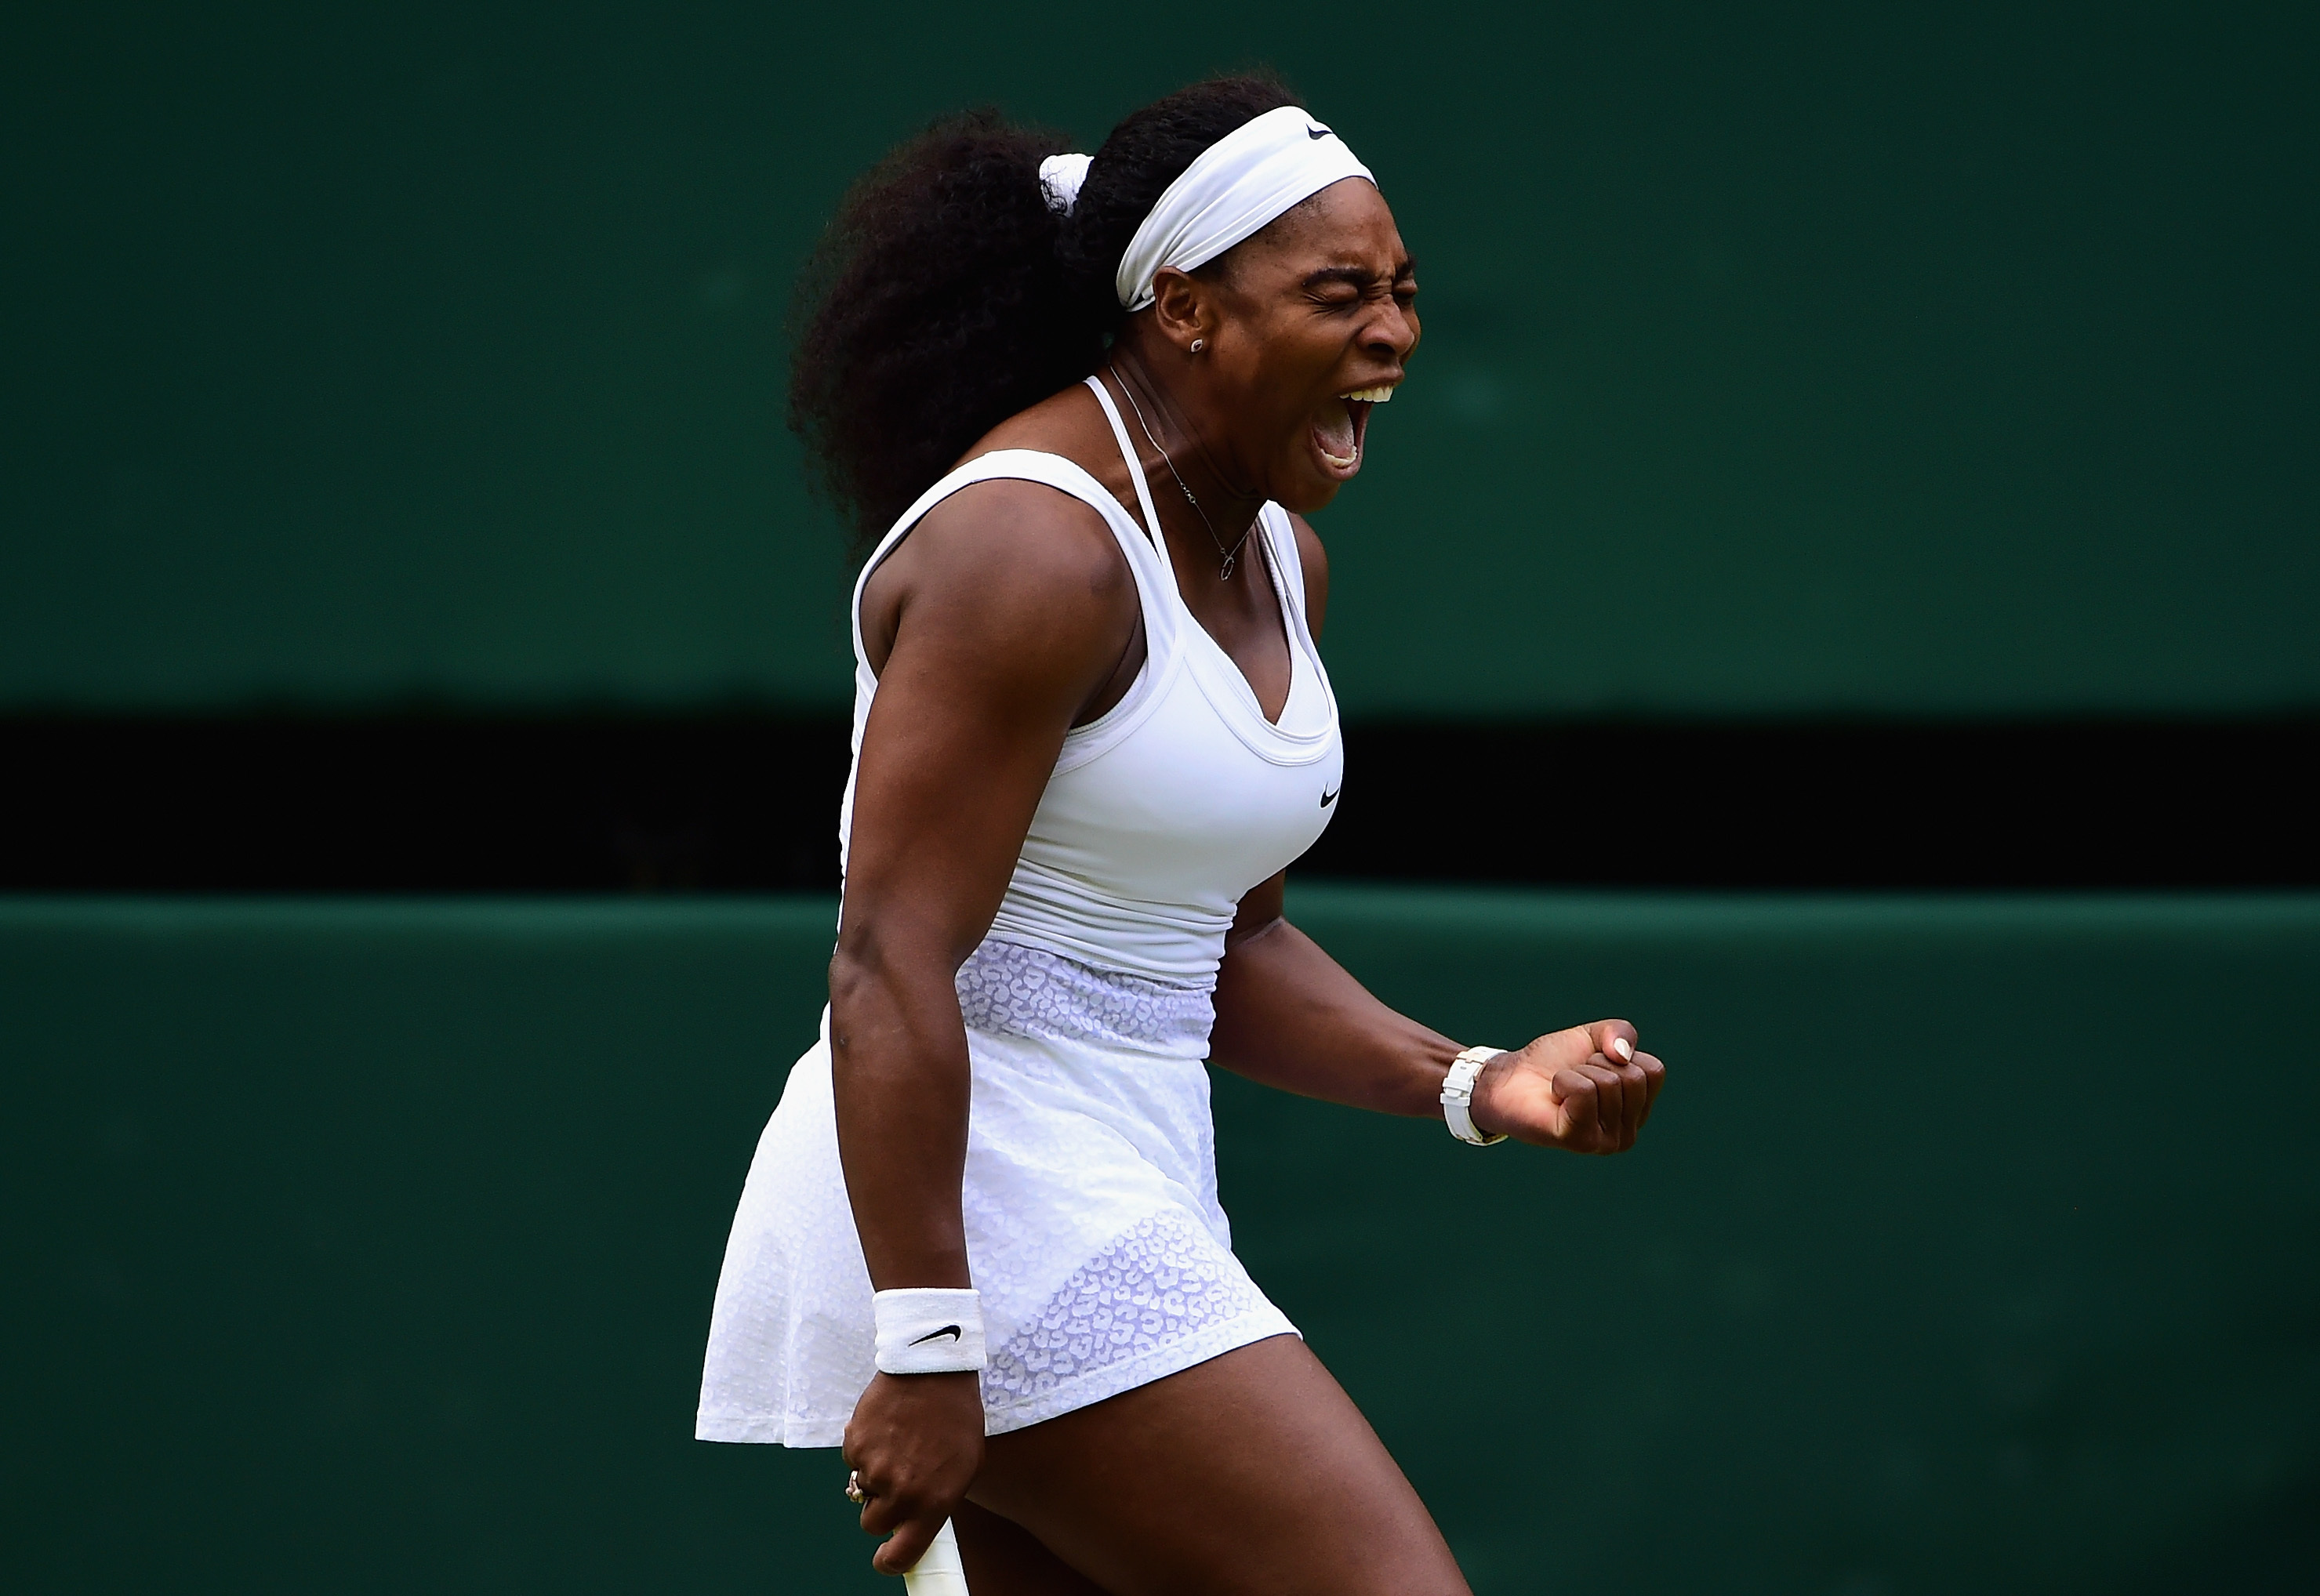 Serena Williams (Shaun Botterill/Getty Images)